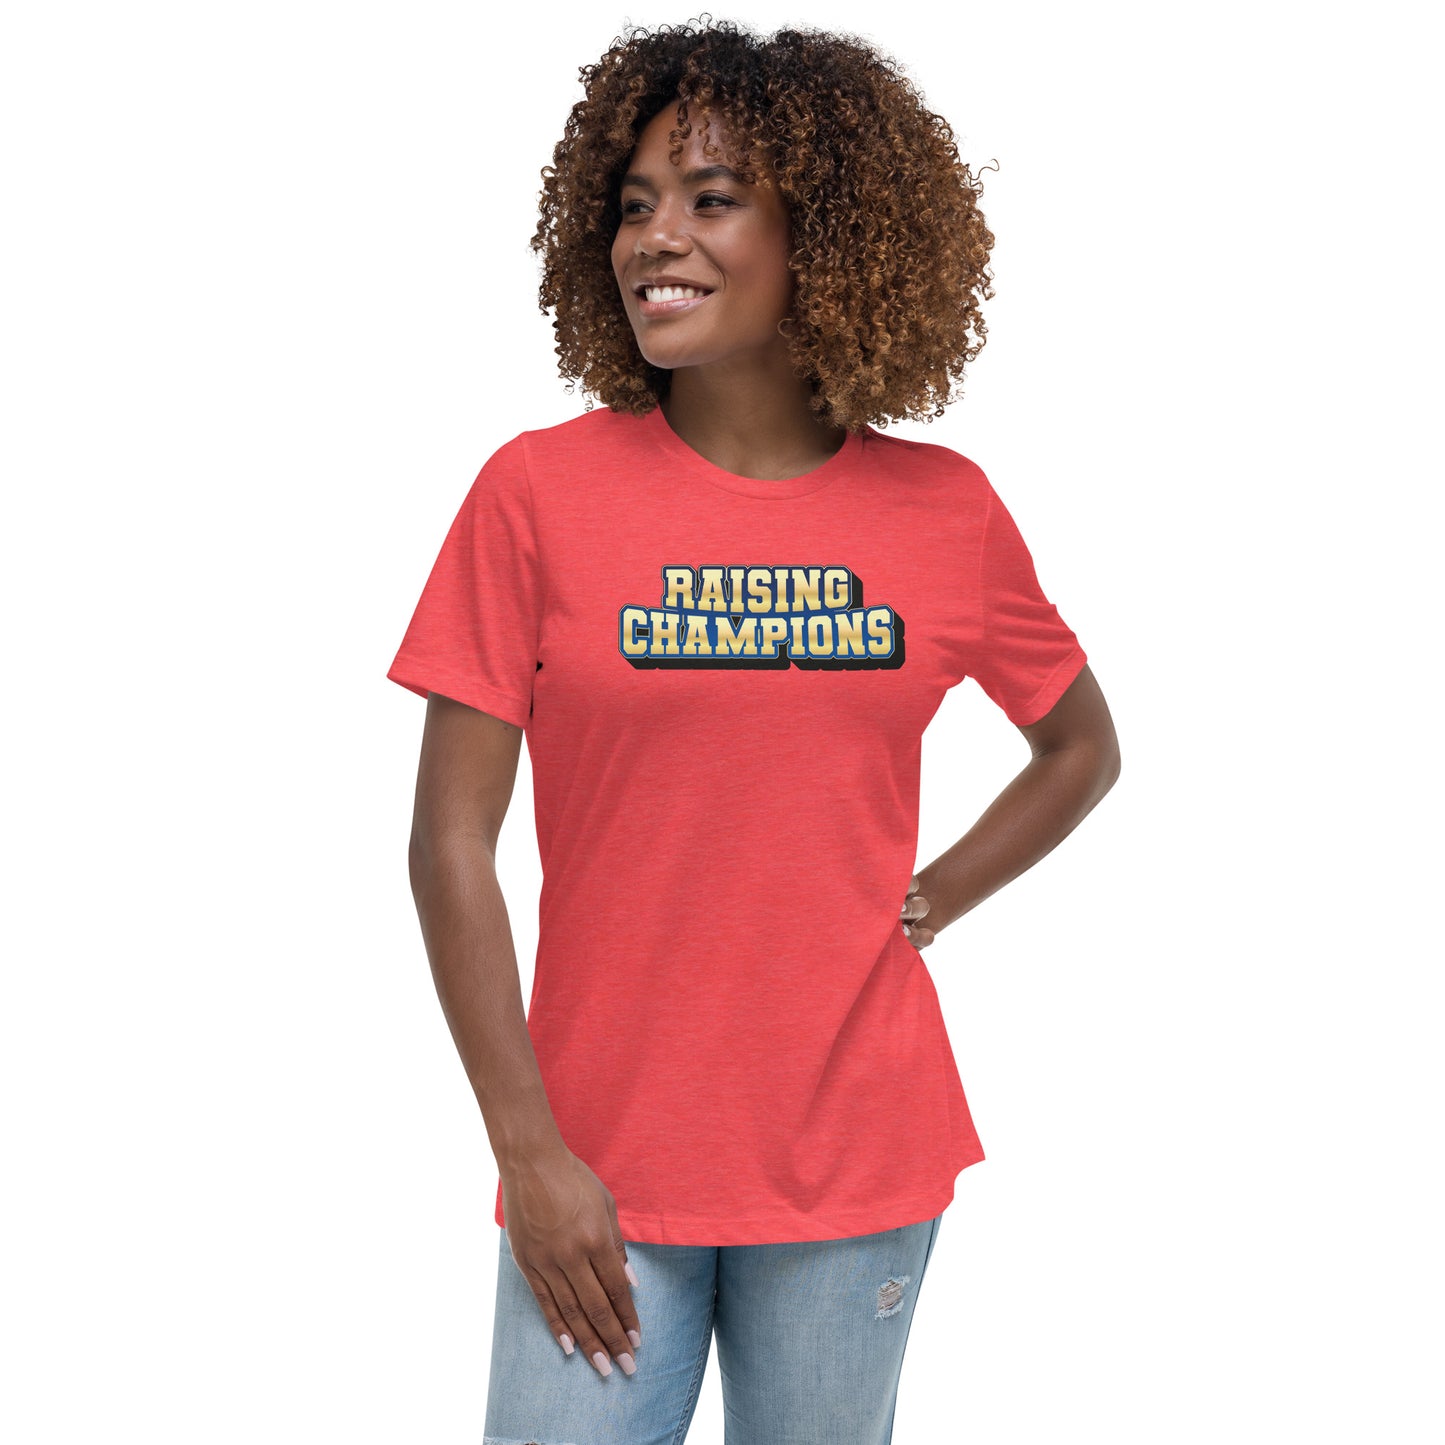 Raising Champions Women's Relaxed T-Shirt